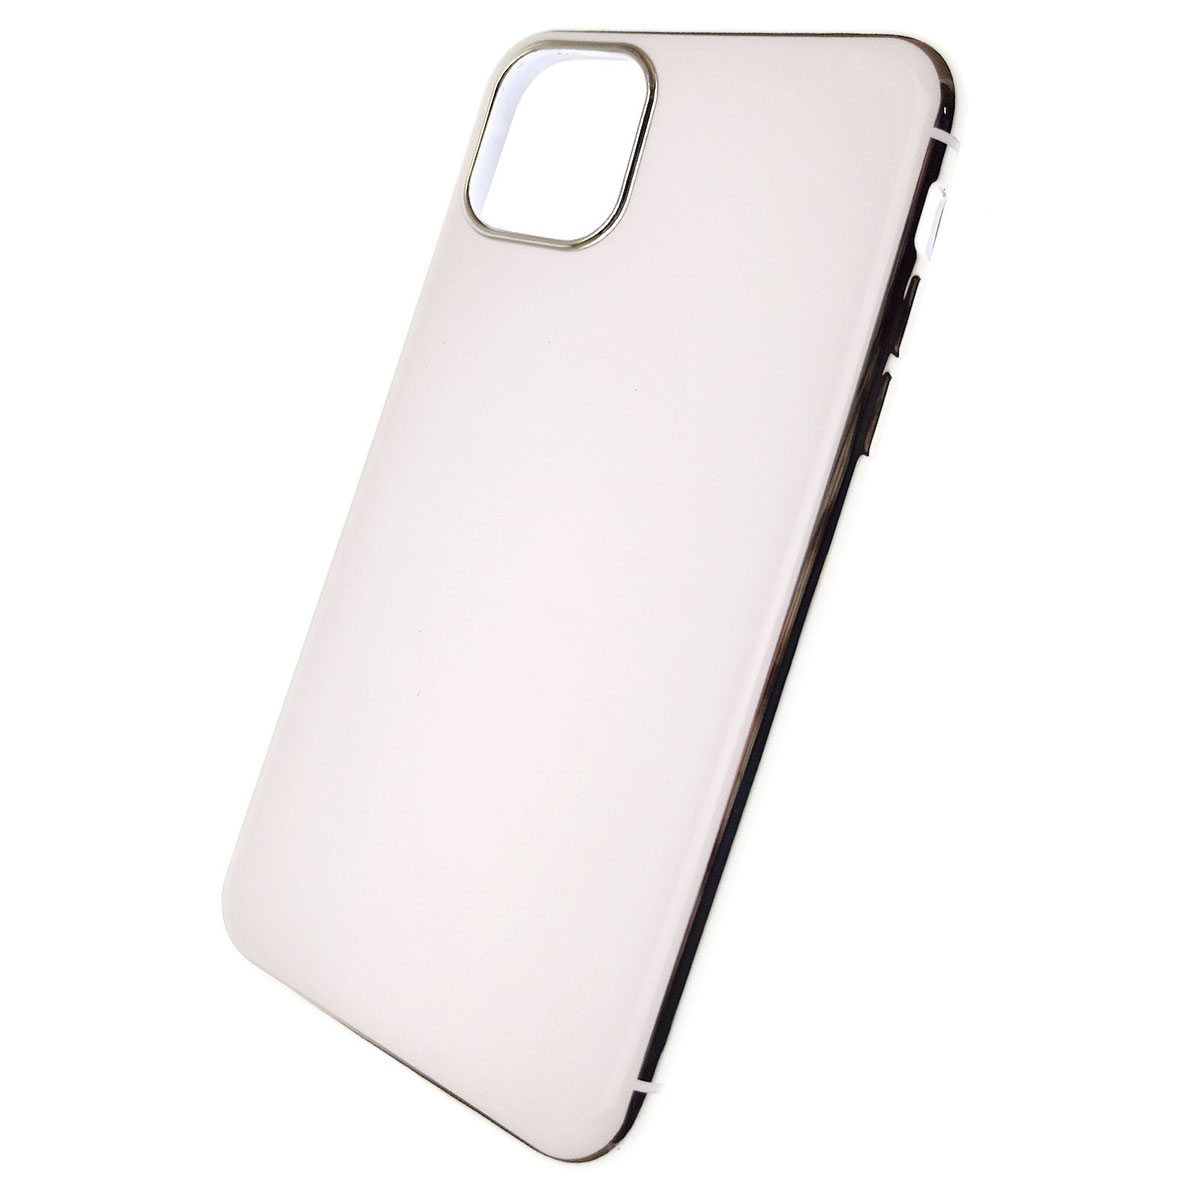 Чехол накладка для APPLE iPhone 11 Pro MAX 2019, силикон, глянец, цвет белый.